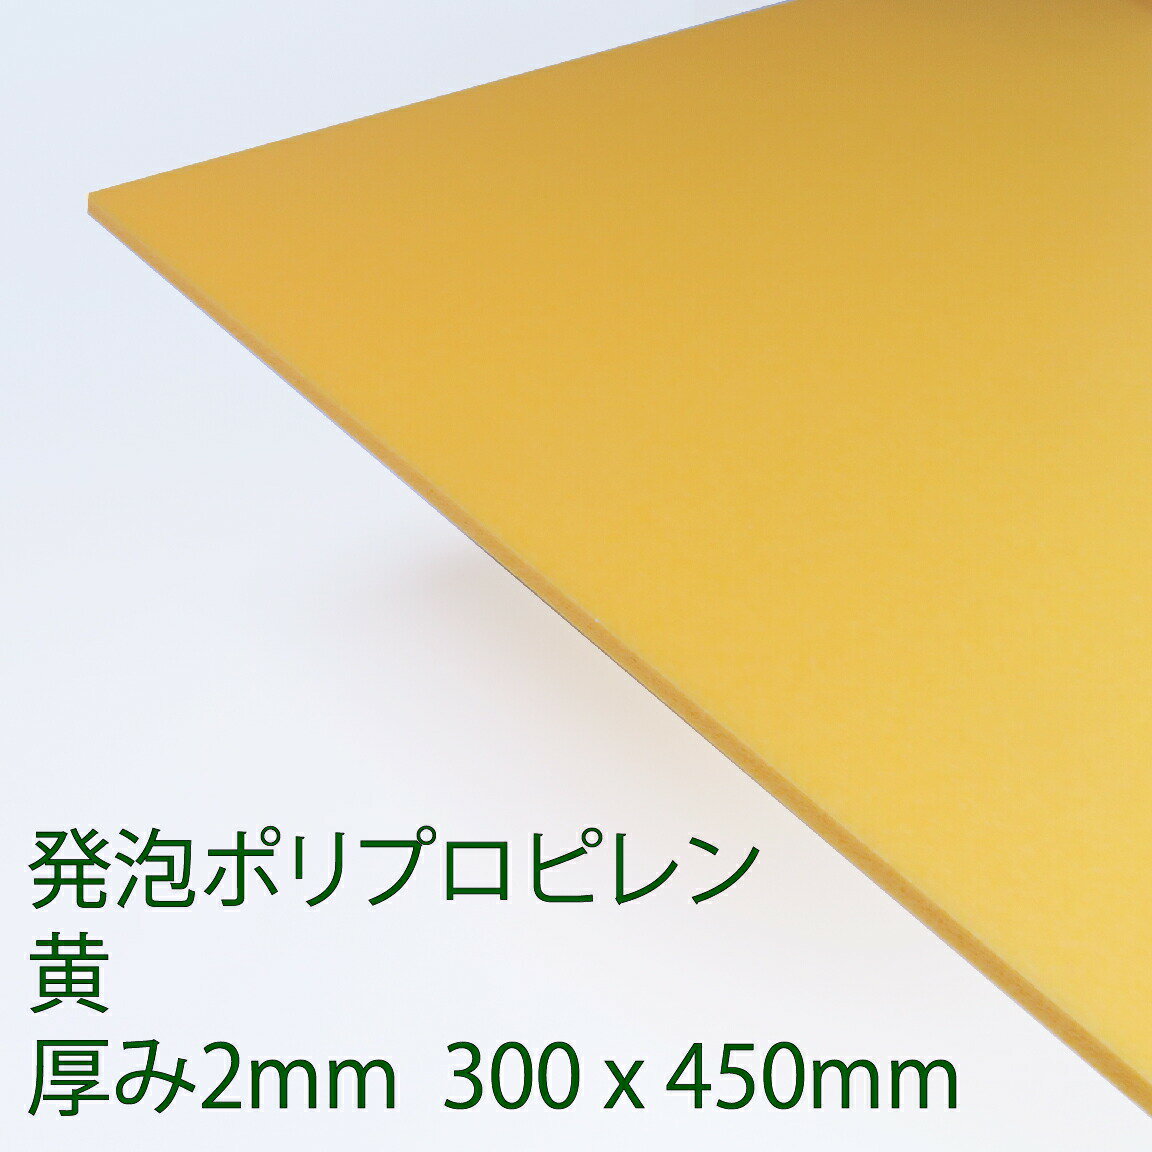 PPクラフトシート 発泡タイプ 黄(HP5) 厚み2mm 300mm×450mm ポリプロピレン 軽量 印刷可能 仕切り板 DIY アクリサンデー